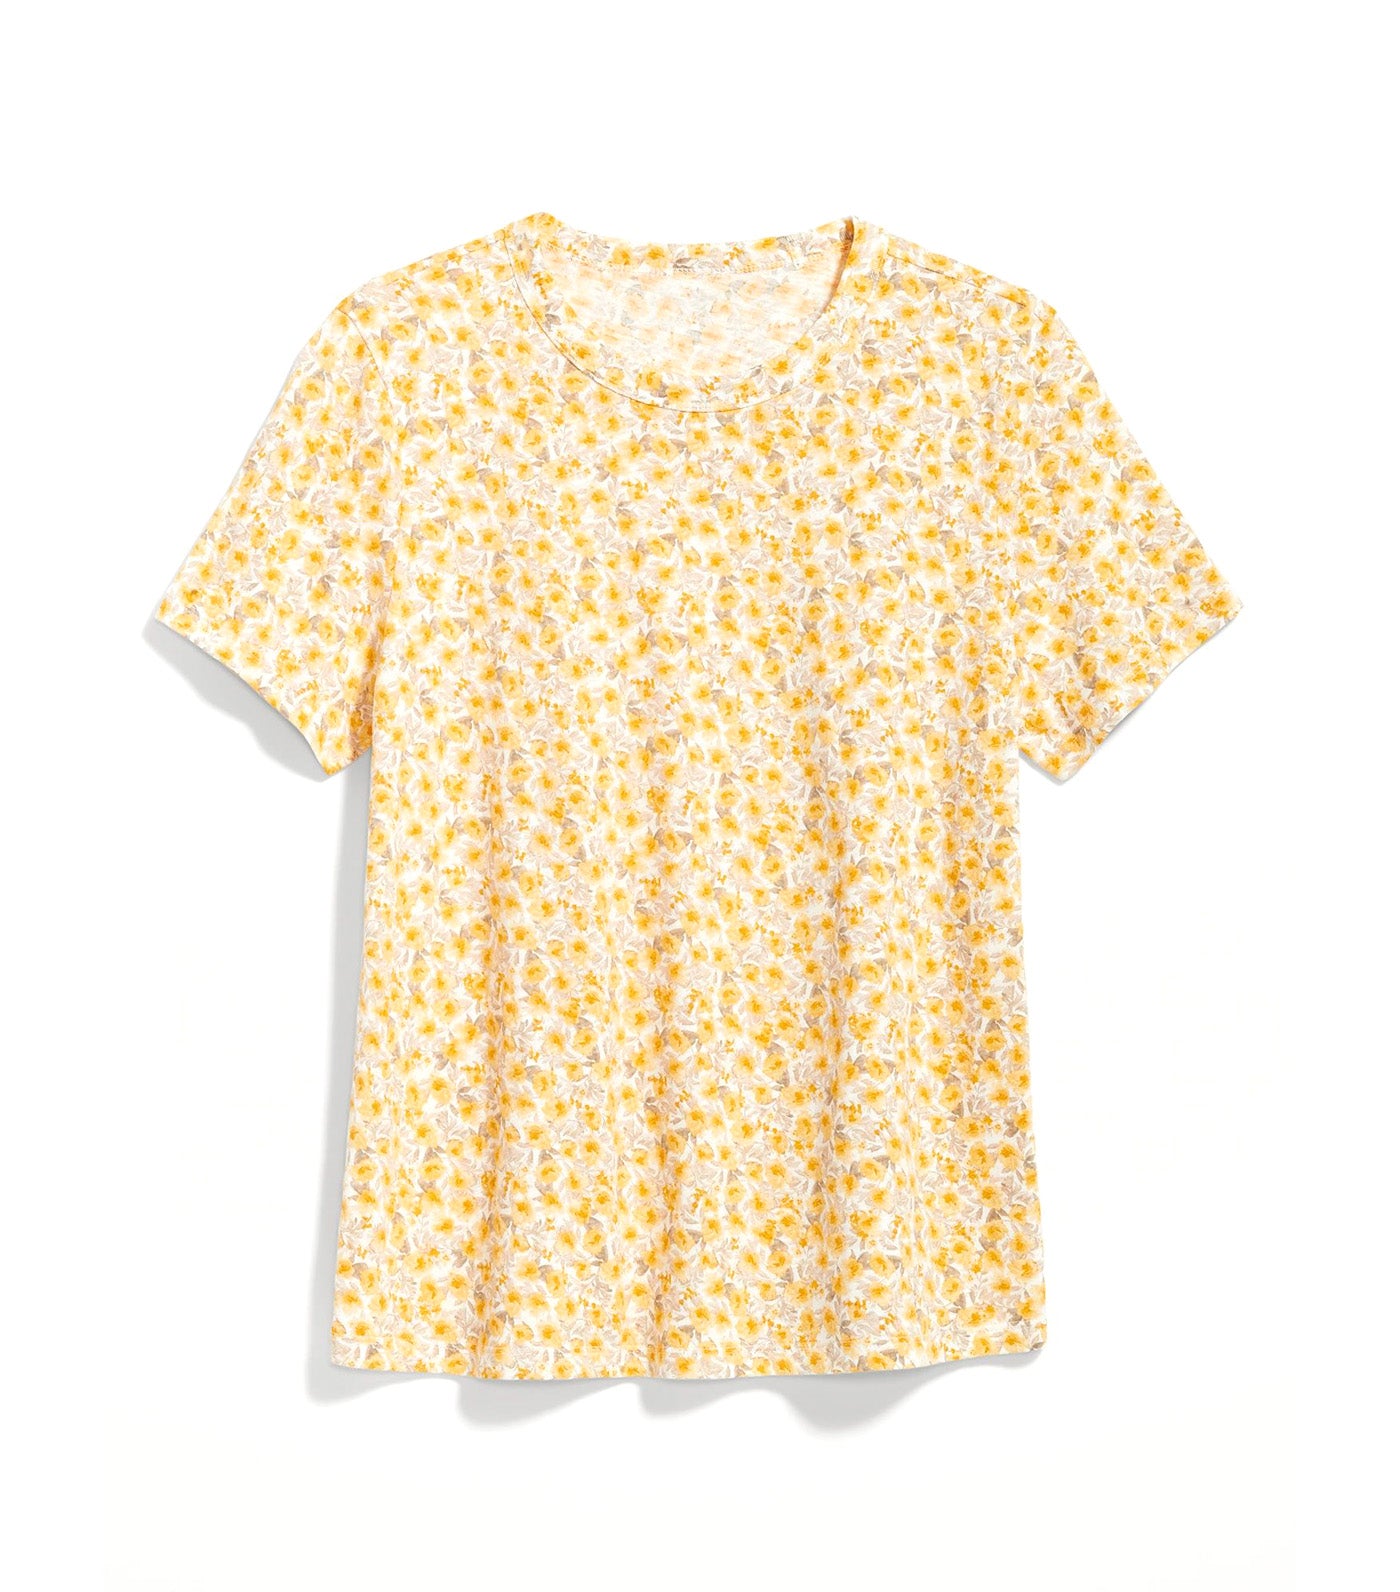 EveryWear Printed Slub-Knit T-Shirt for Women Yellow Floral